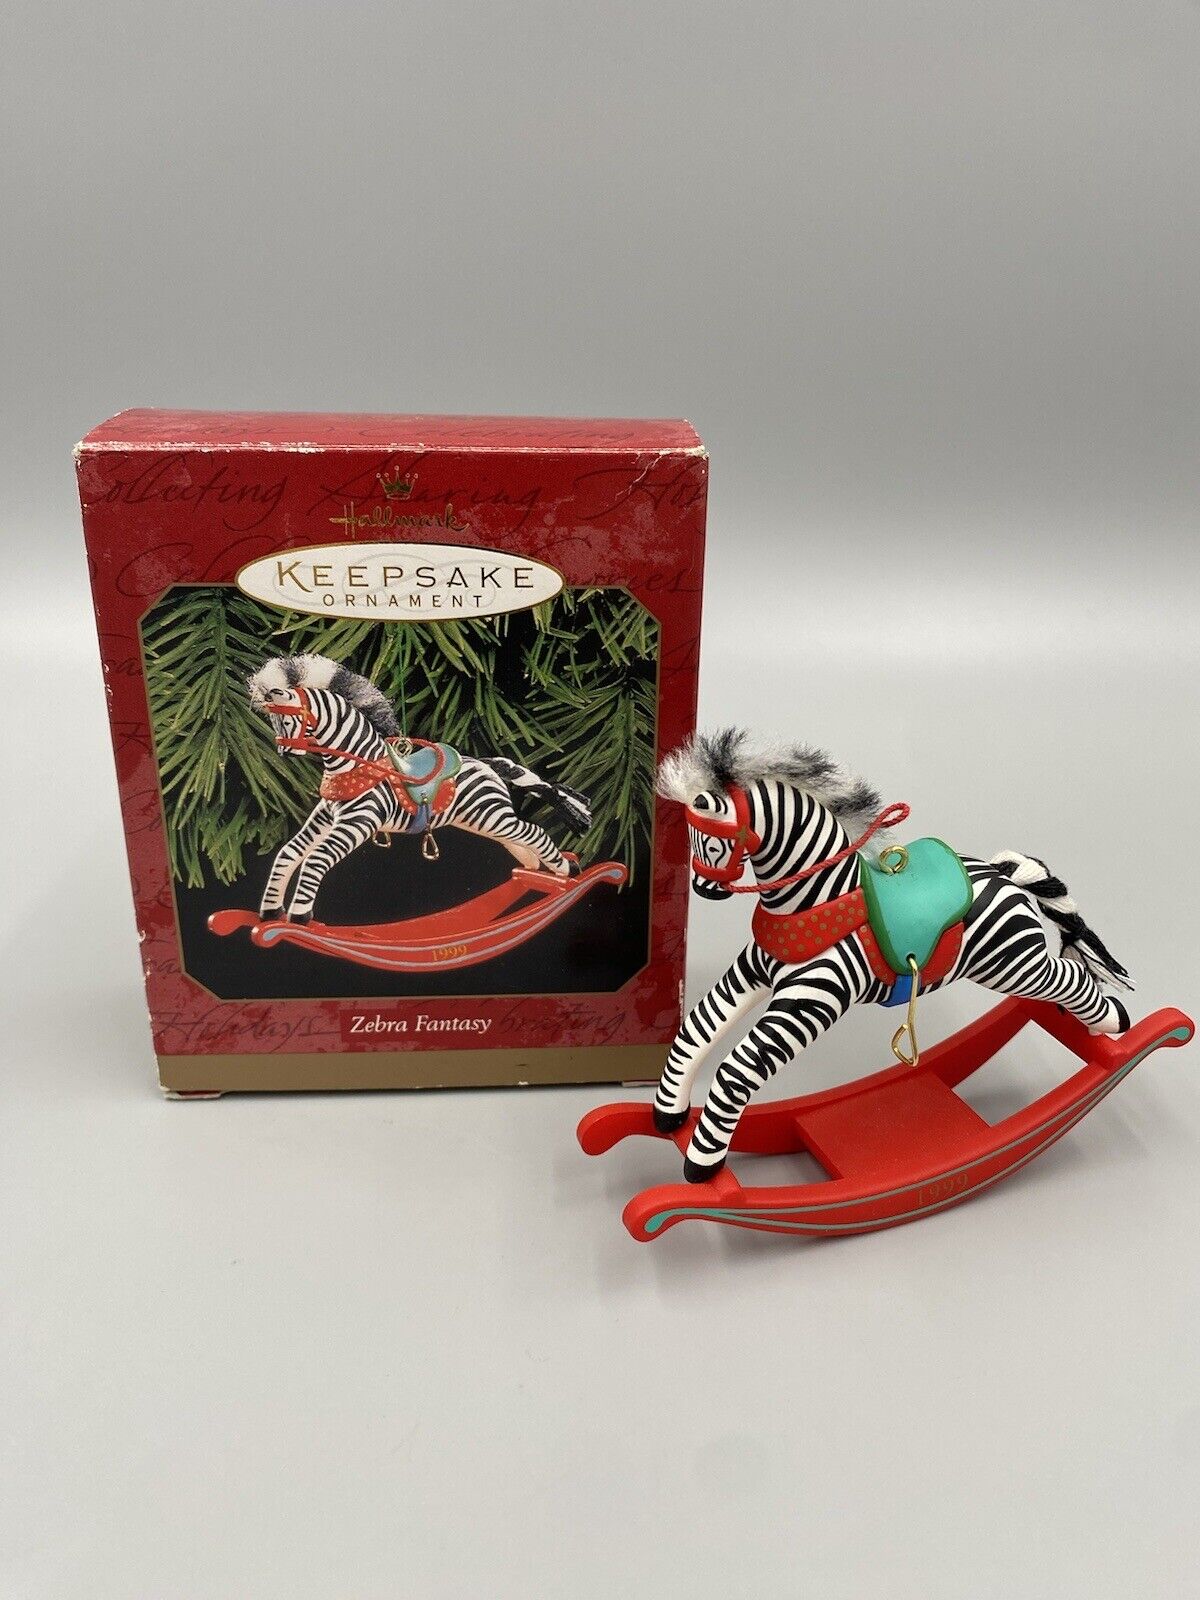 Vintage 1999 Hallmark Zebra Fantasy Rocking Horse Ornament